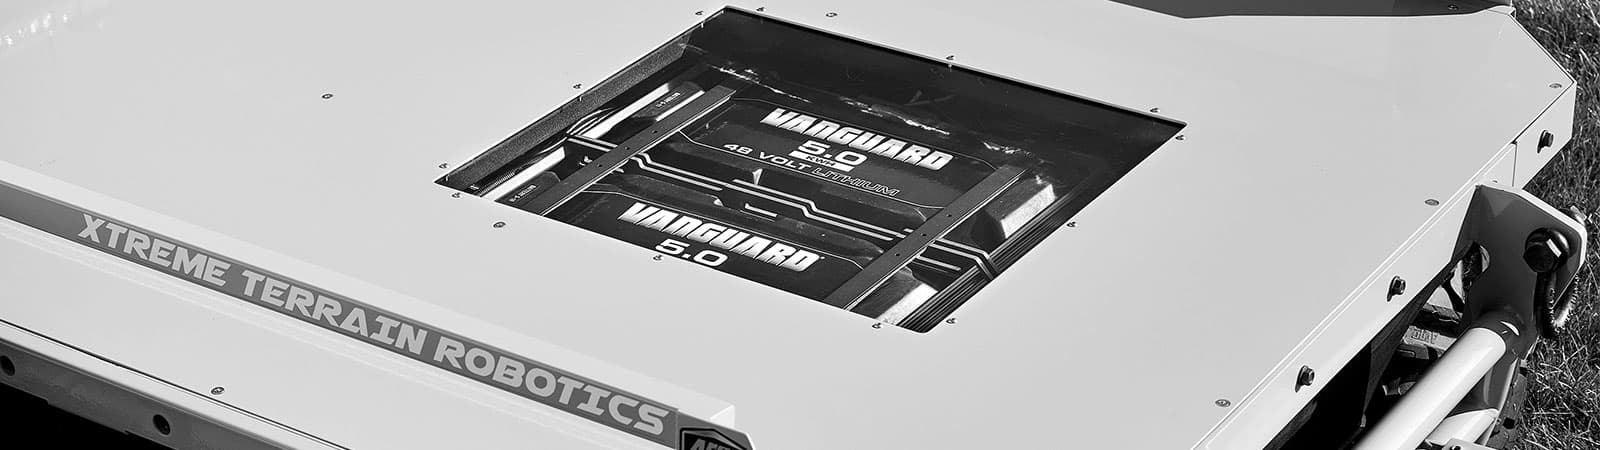 Vanguard commercial battery pack